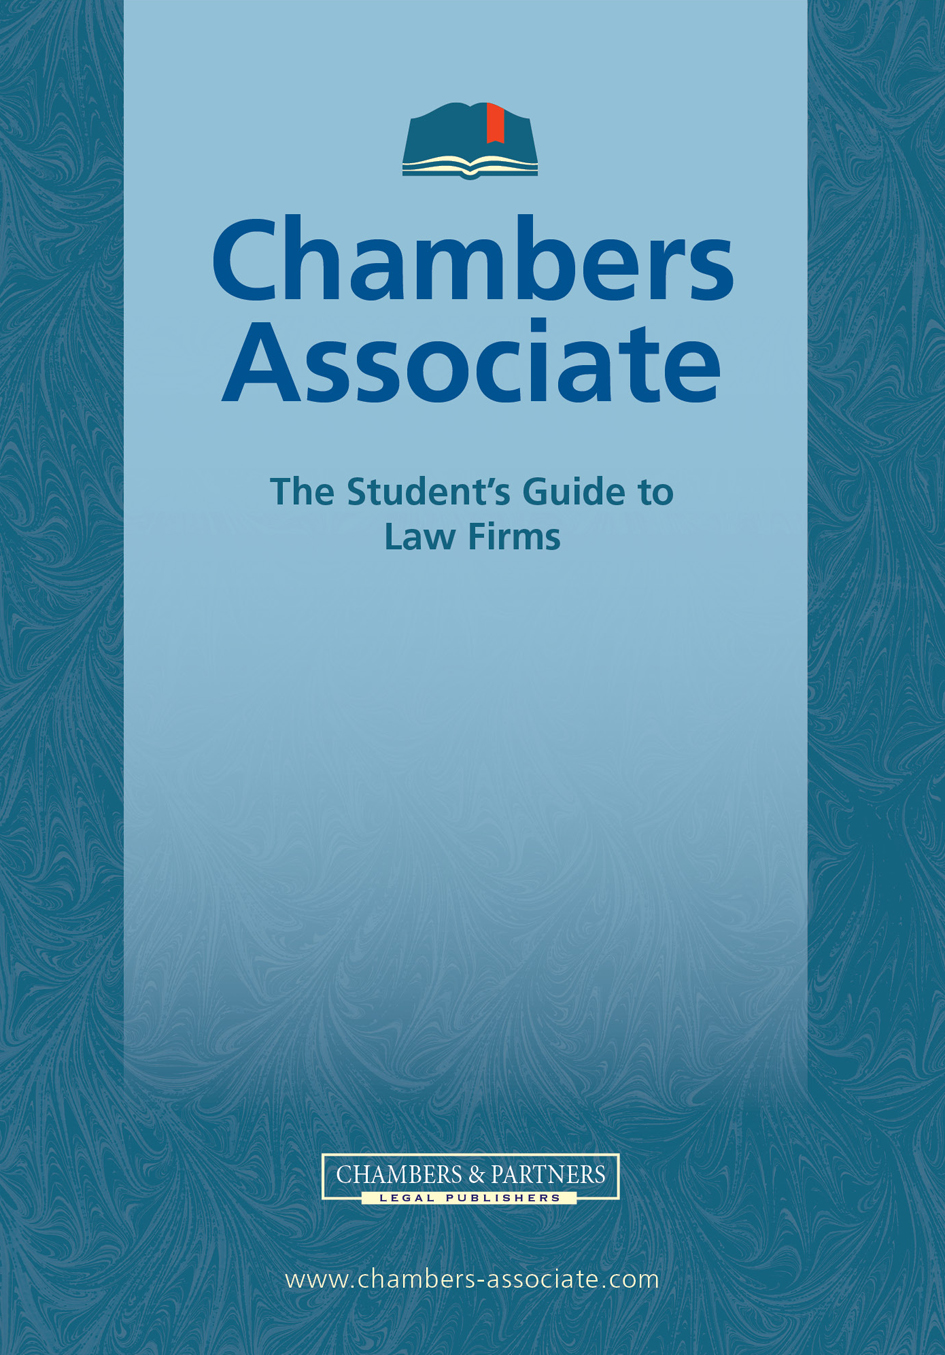 www.chambers-associate.com